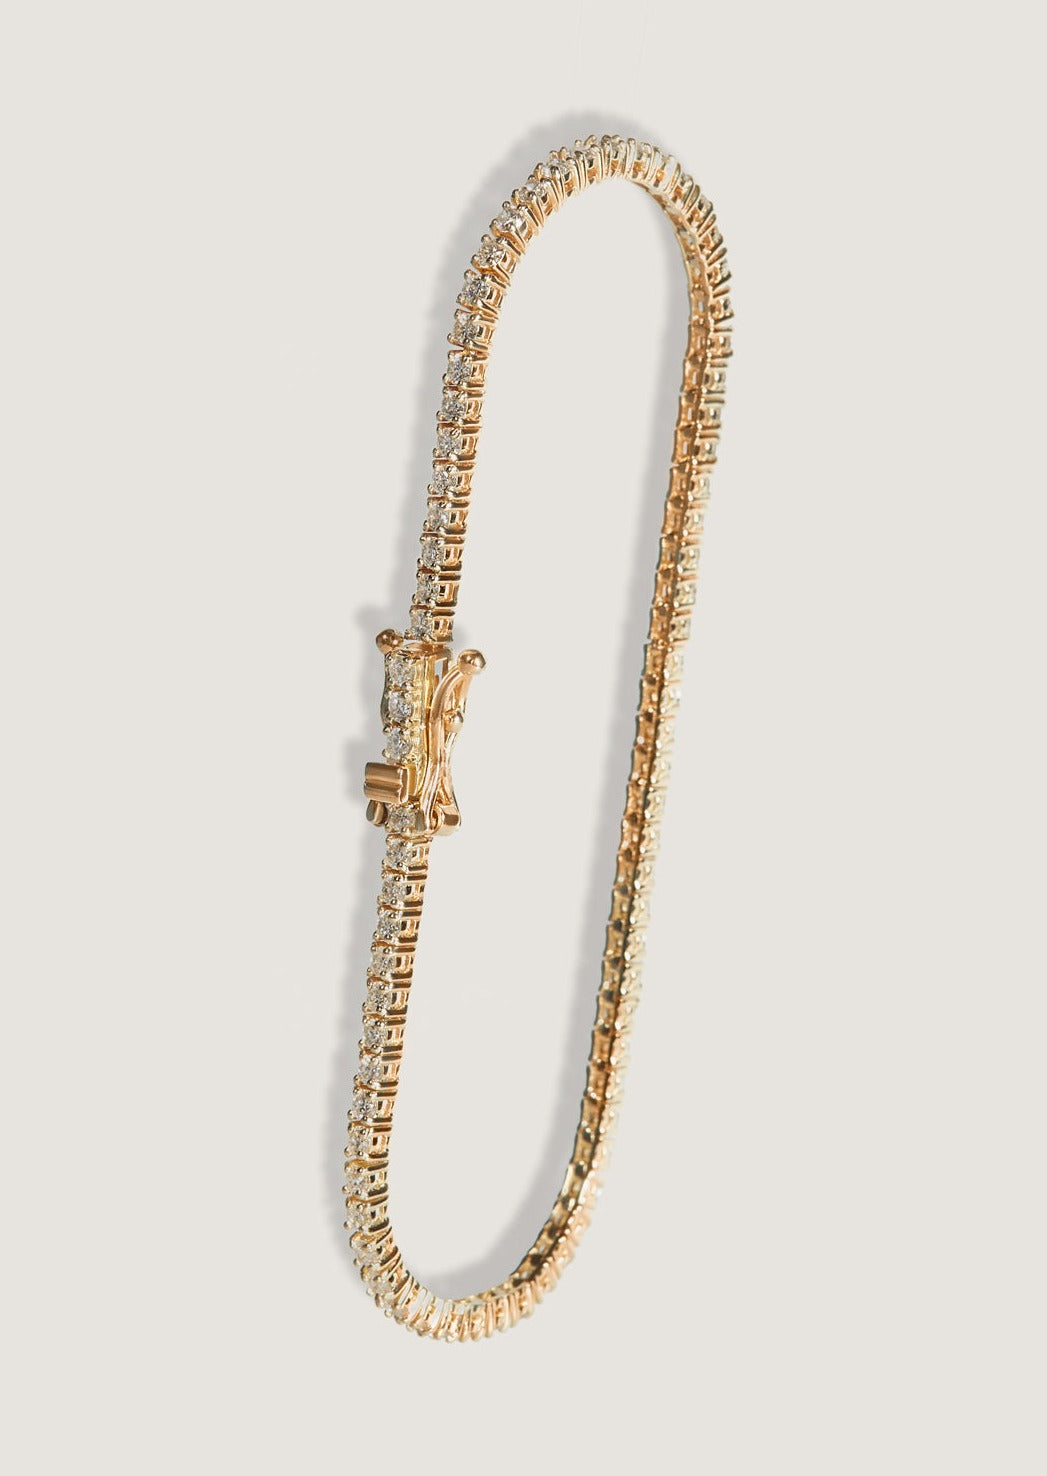 alt="Diana Diamond Tennis Bracelet"